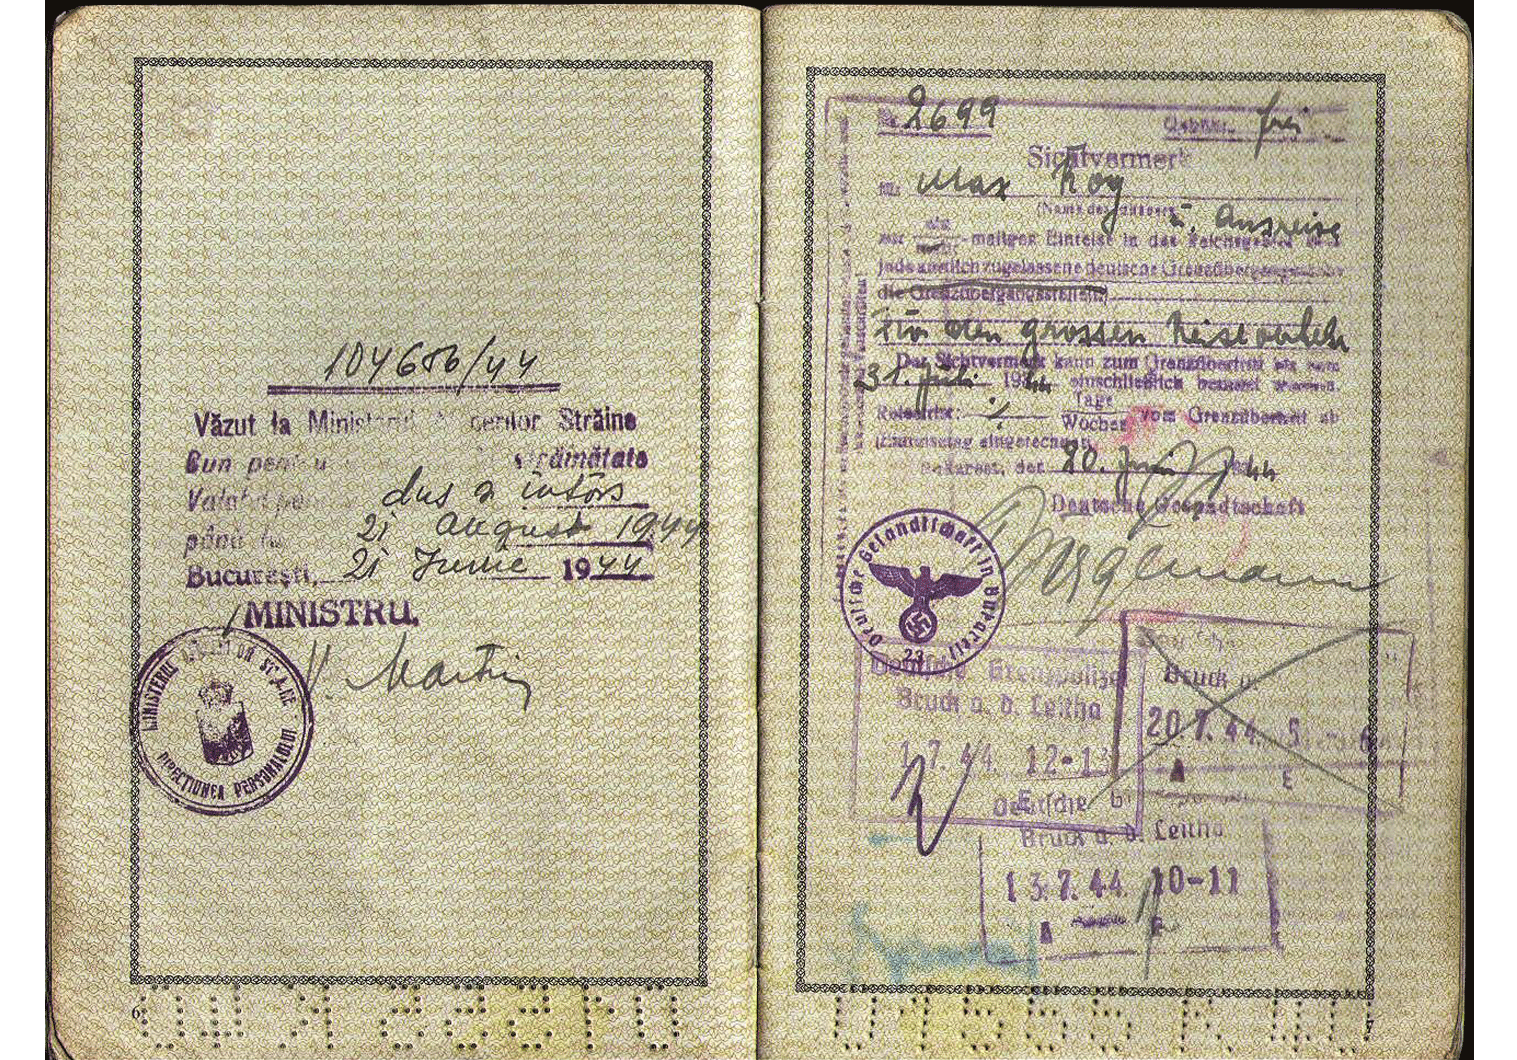 WW2 German Service Passport